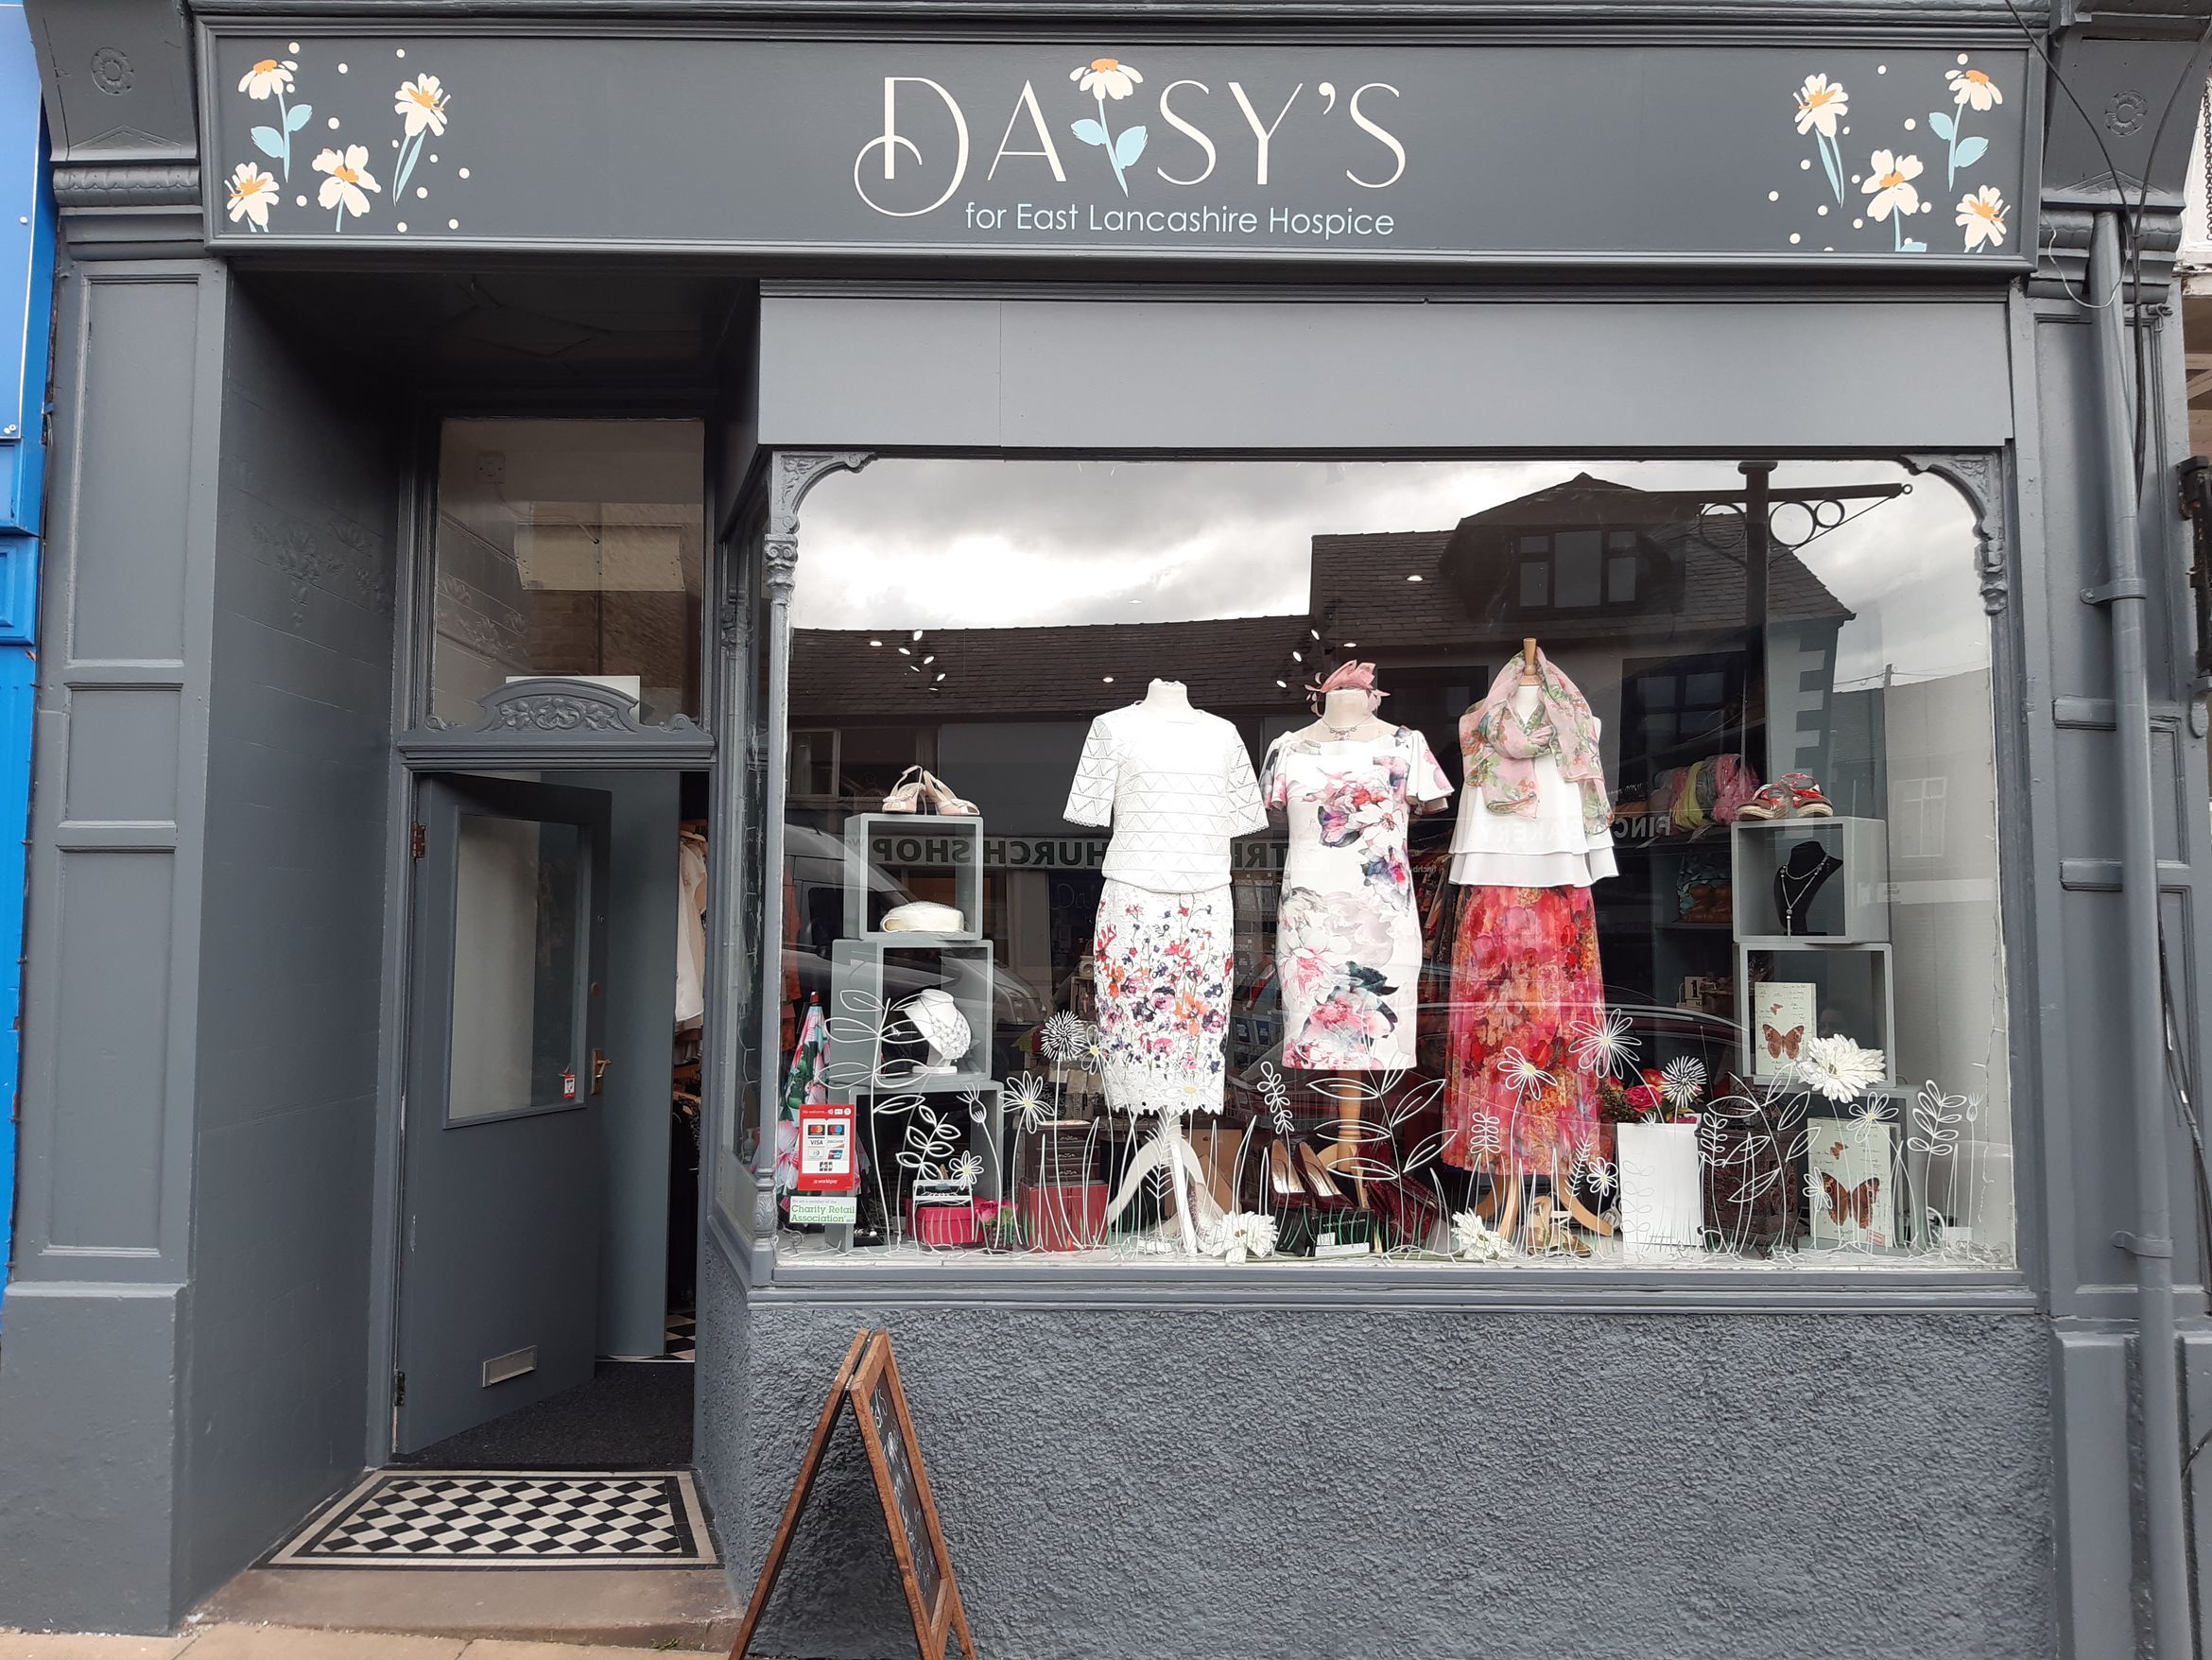 Daisy’s for East Lancashire